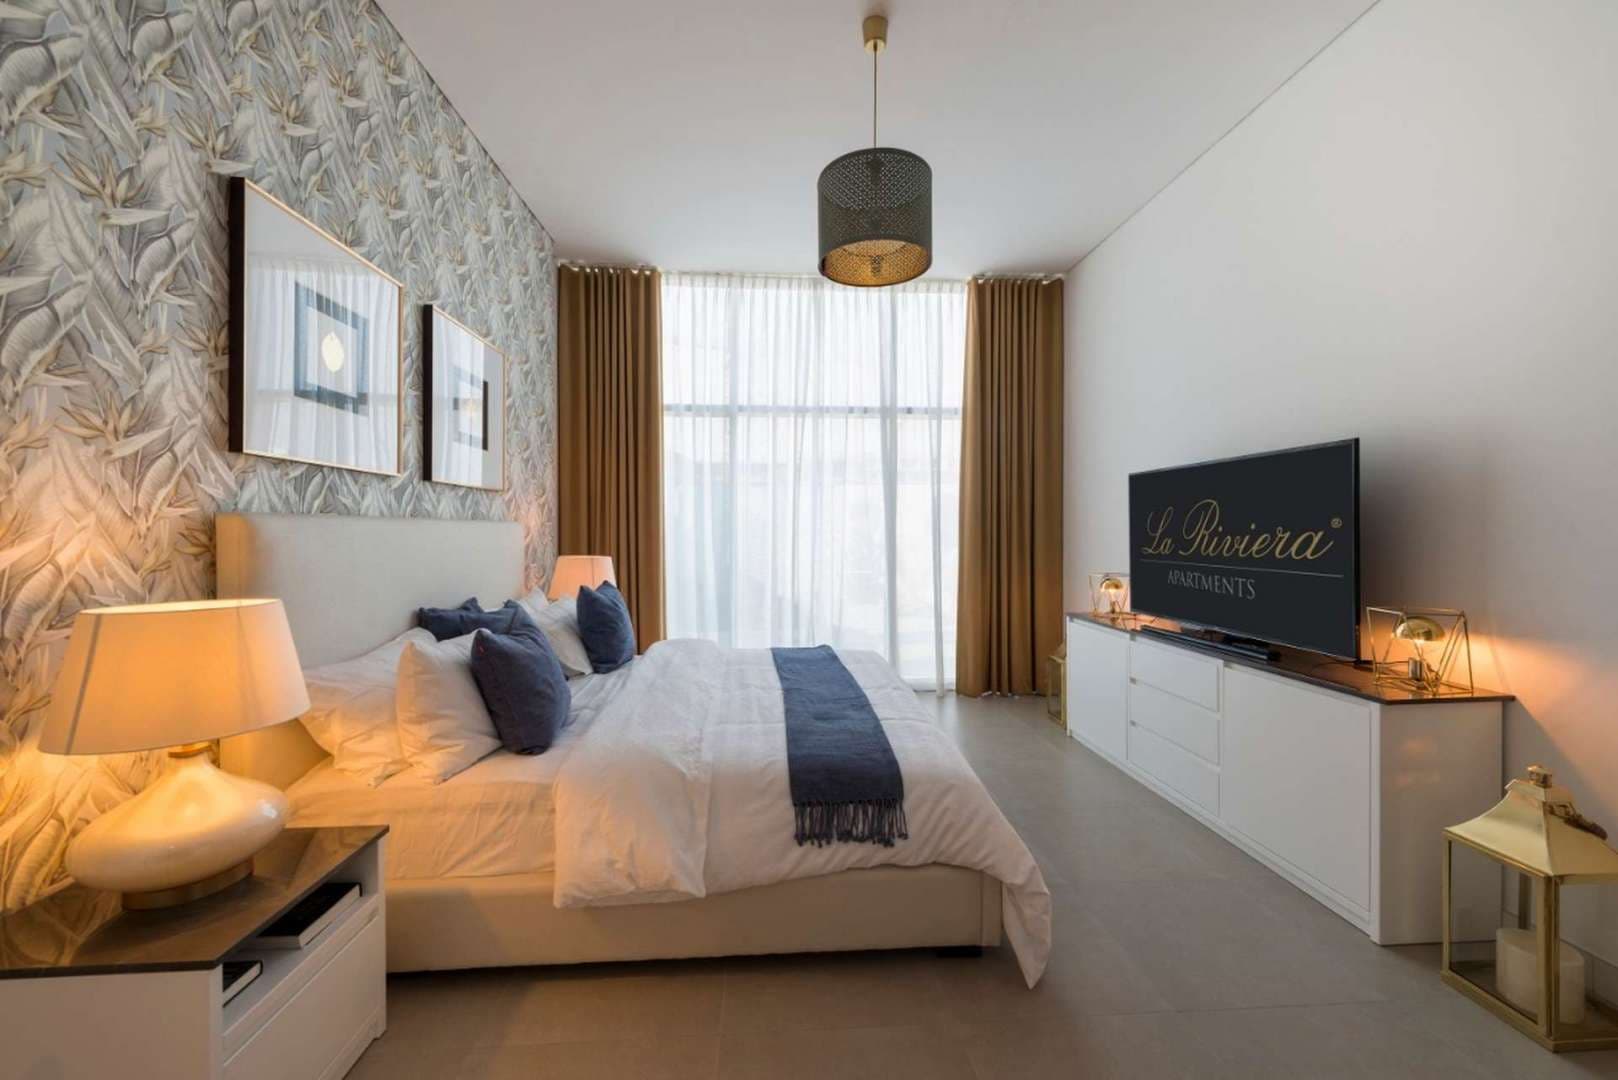 2 Bedroom Apartment For Sale La Riviera Apartments Lp06379 122dba94f68ce000.jpg